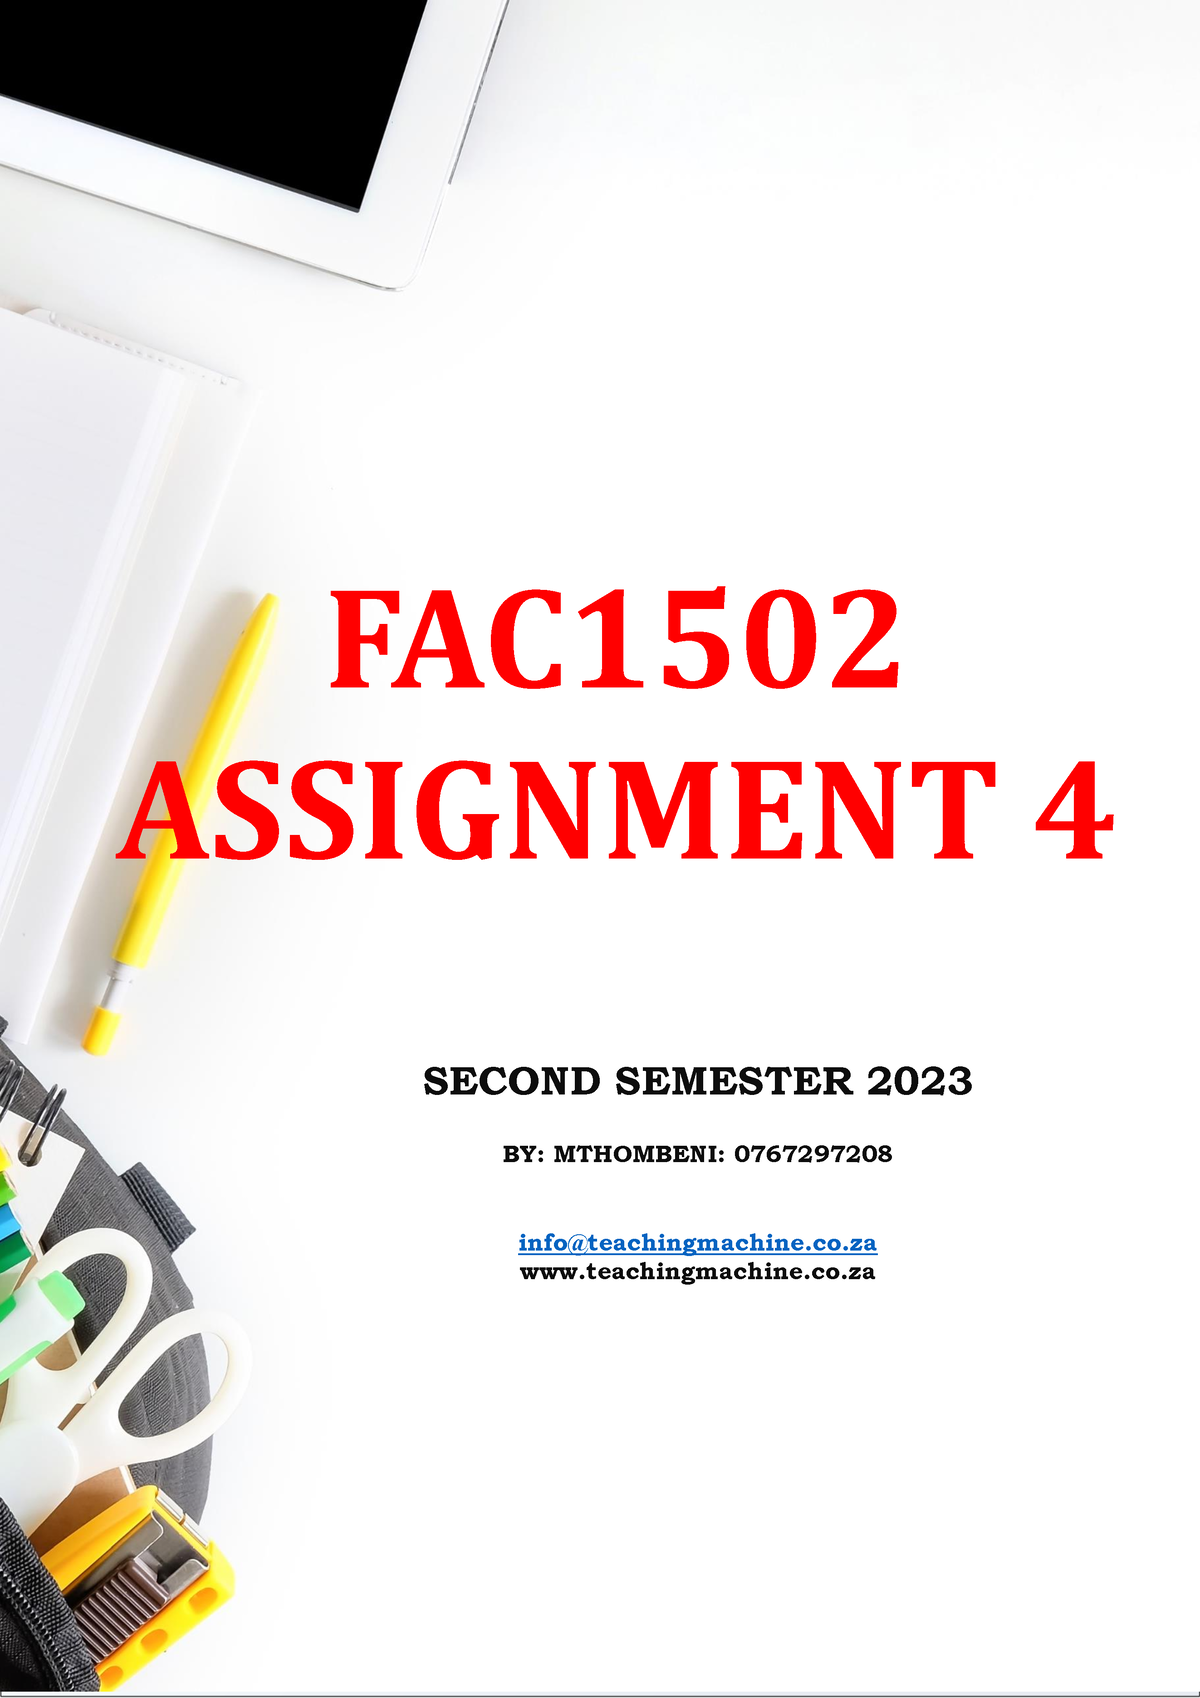 fac1502 assignment 4 2023